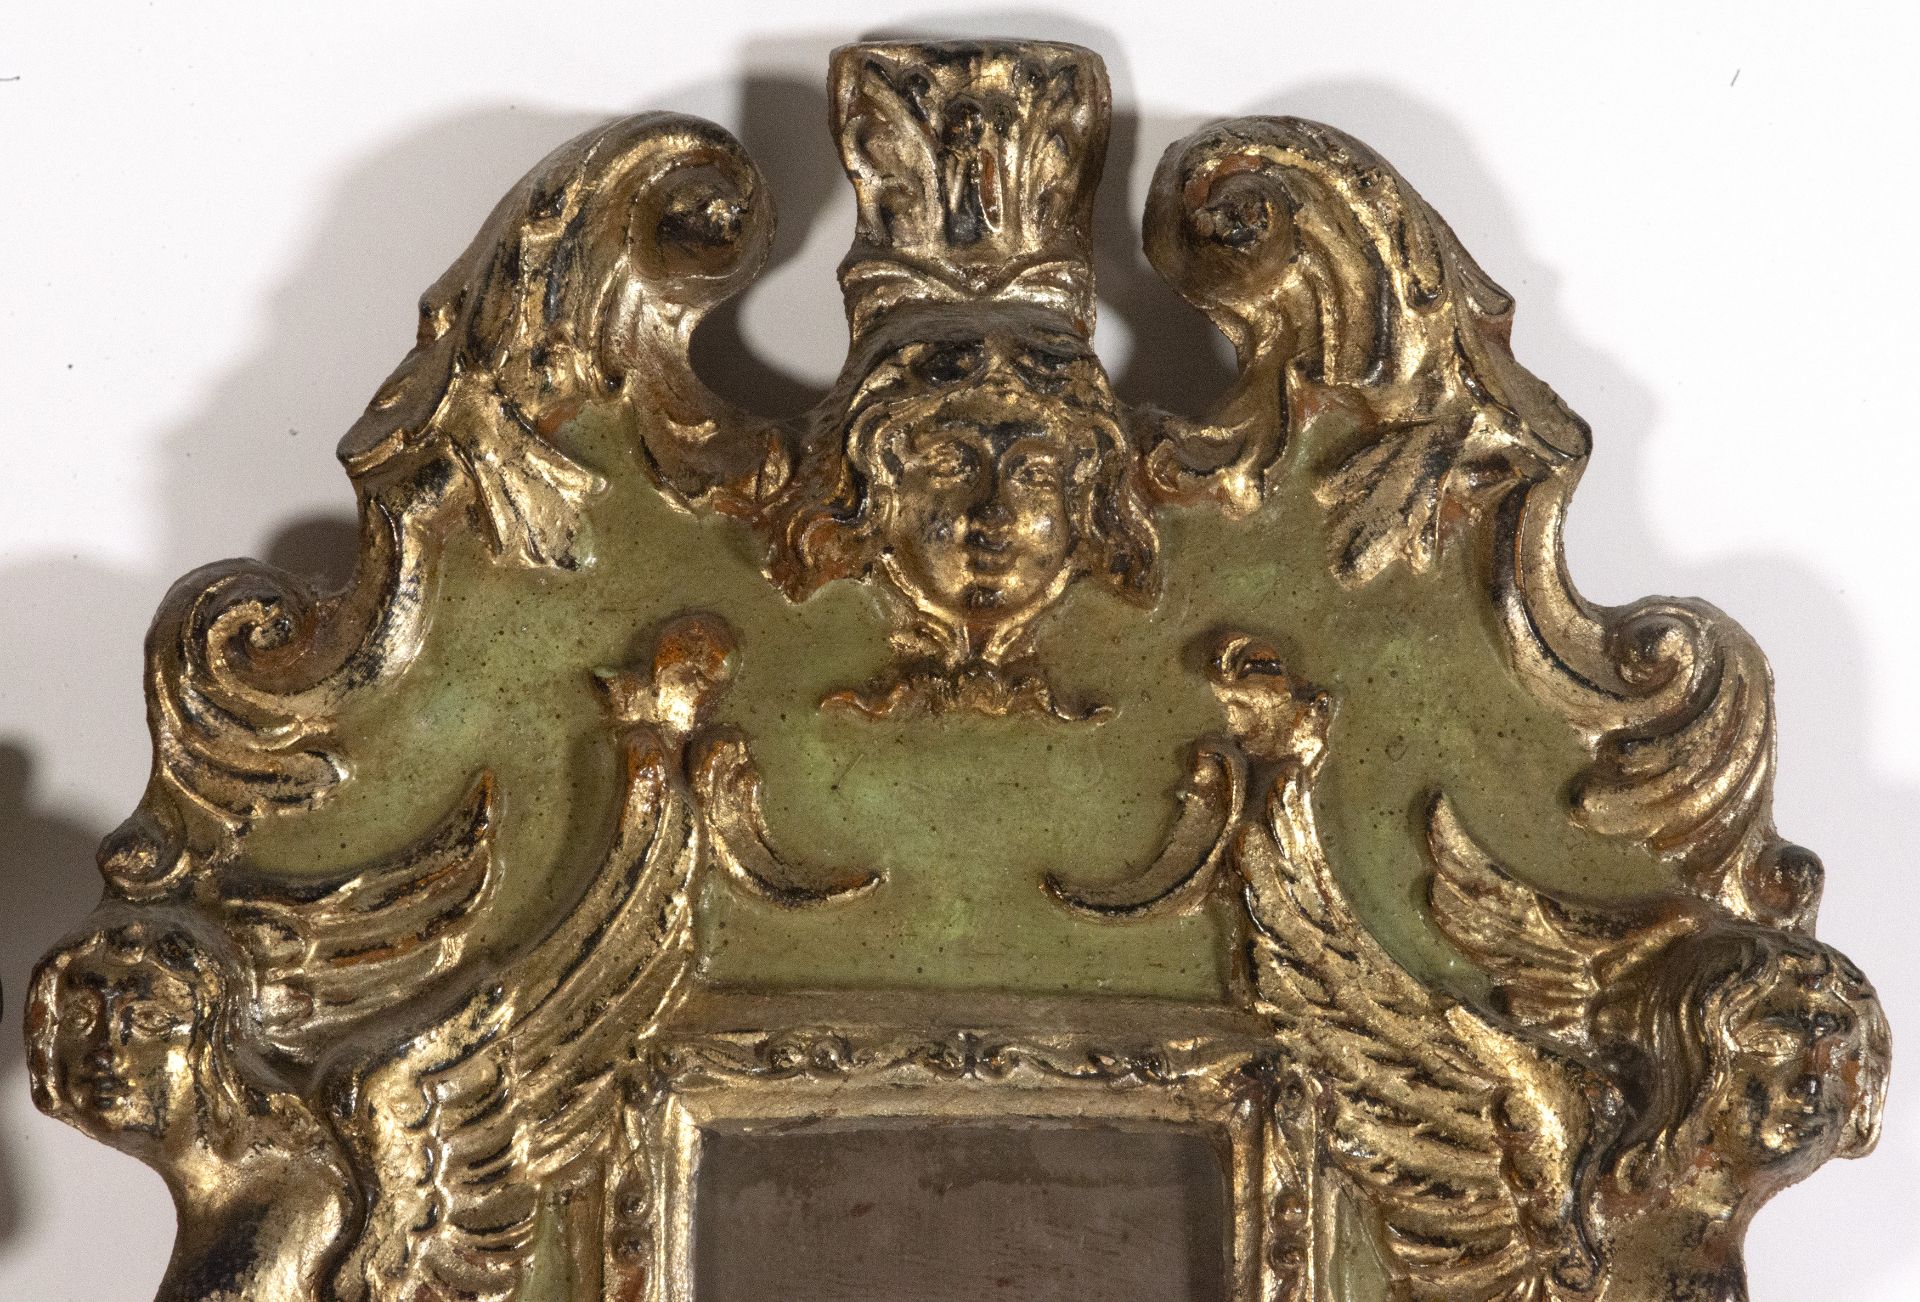 Pair of Distinguished 18th Century Venetian Mirrors, Veneto or Padua, Italy, 18th century - Bild 2 aus 4